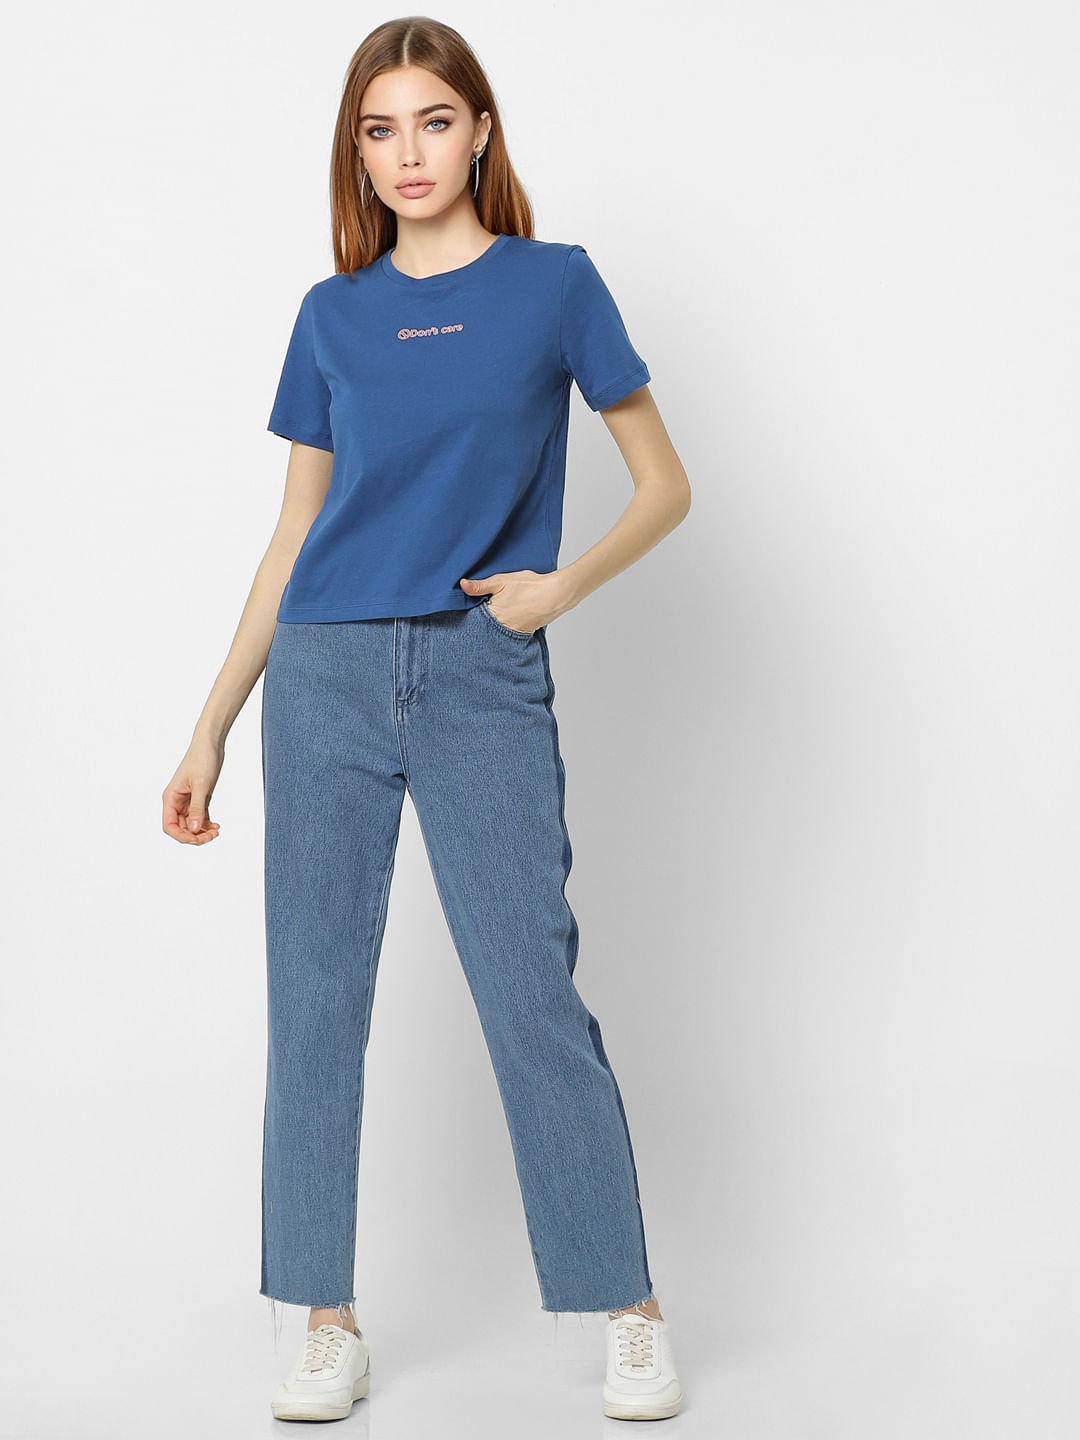 discount 52% Zara blouse WOMEN FASHION Shirts & T-shirts Print Beige/Blue S 